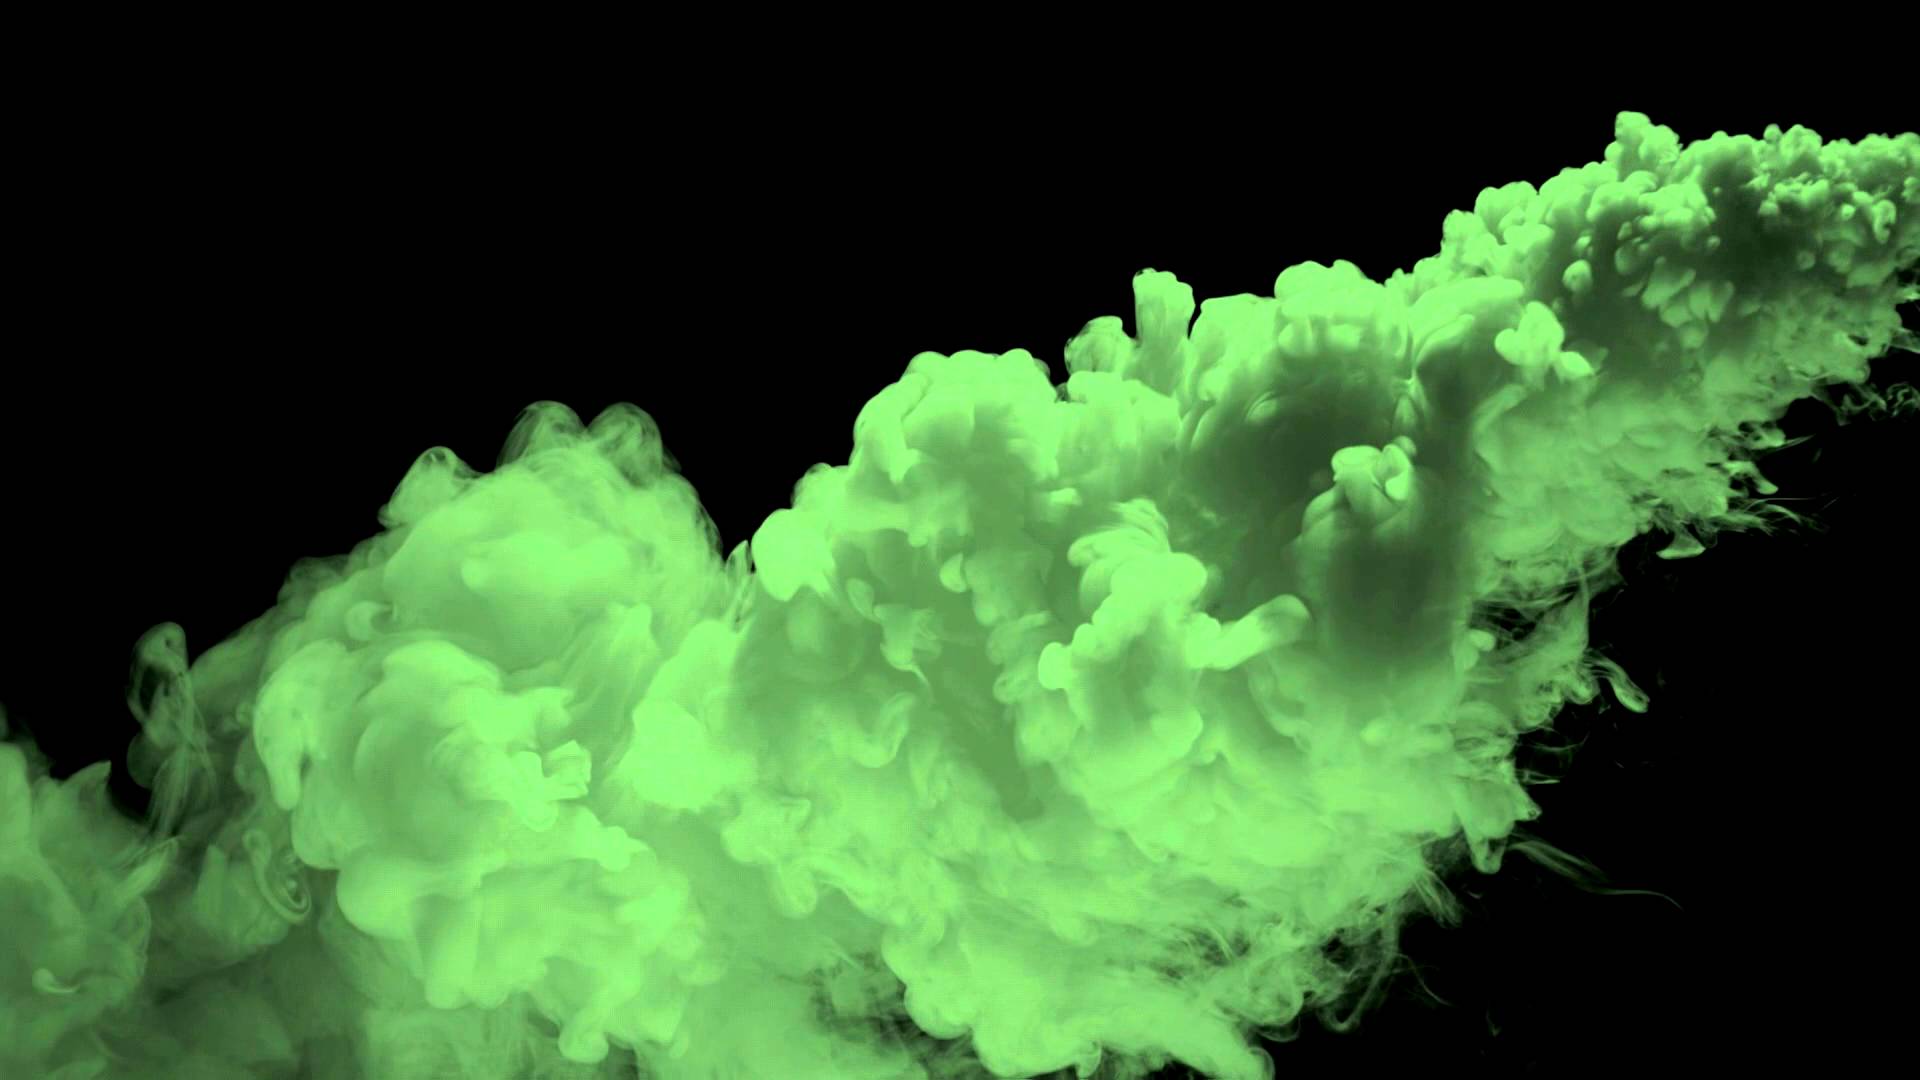 Green Smoke Wallpapers